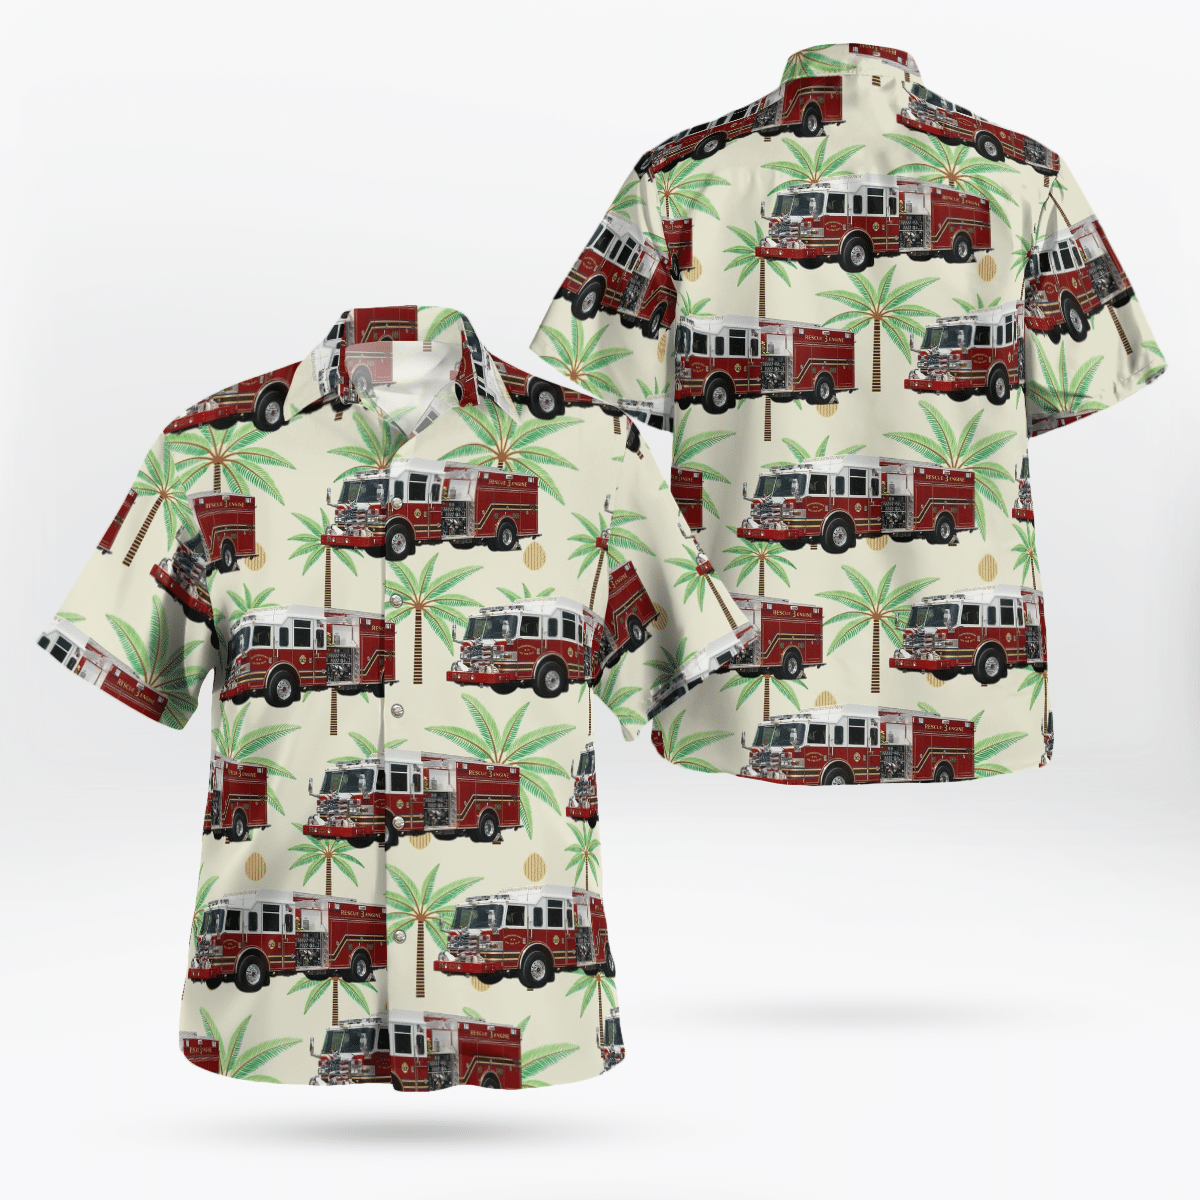 Why don't you order Hot Hawaiian Shirt today? 277